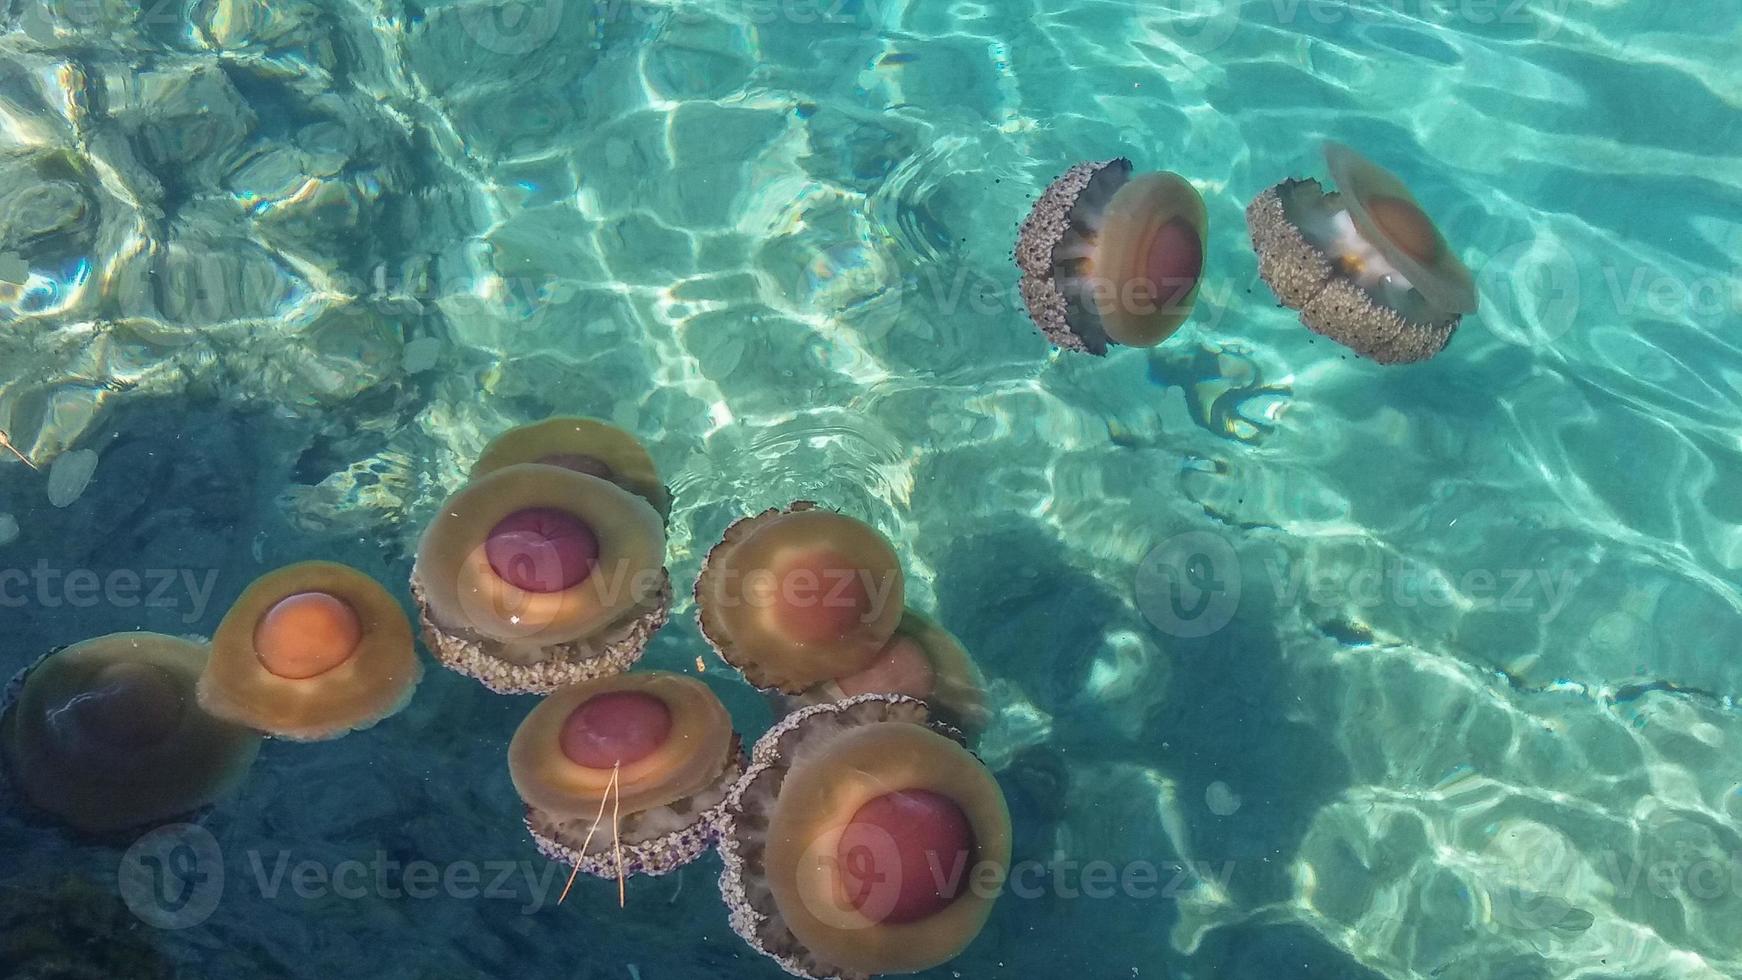 Jellyfish aka Jelly cnidaria photo